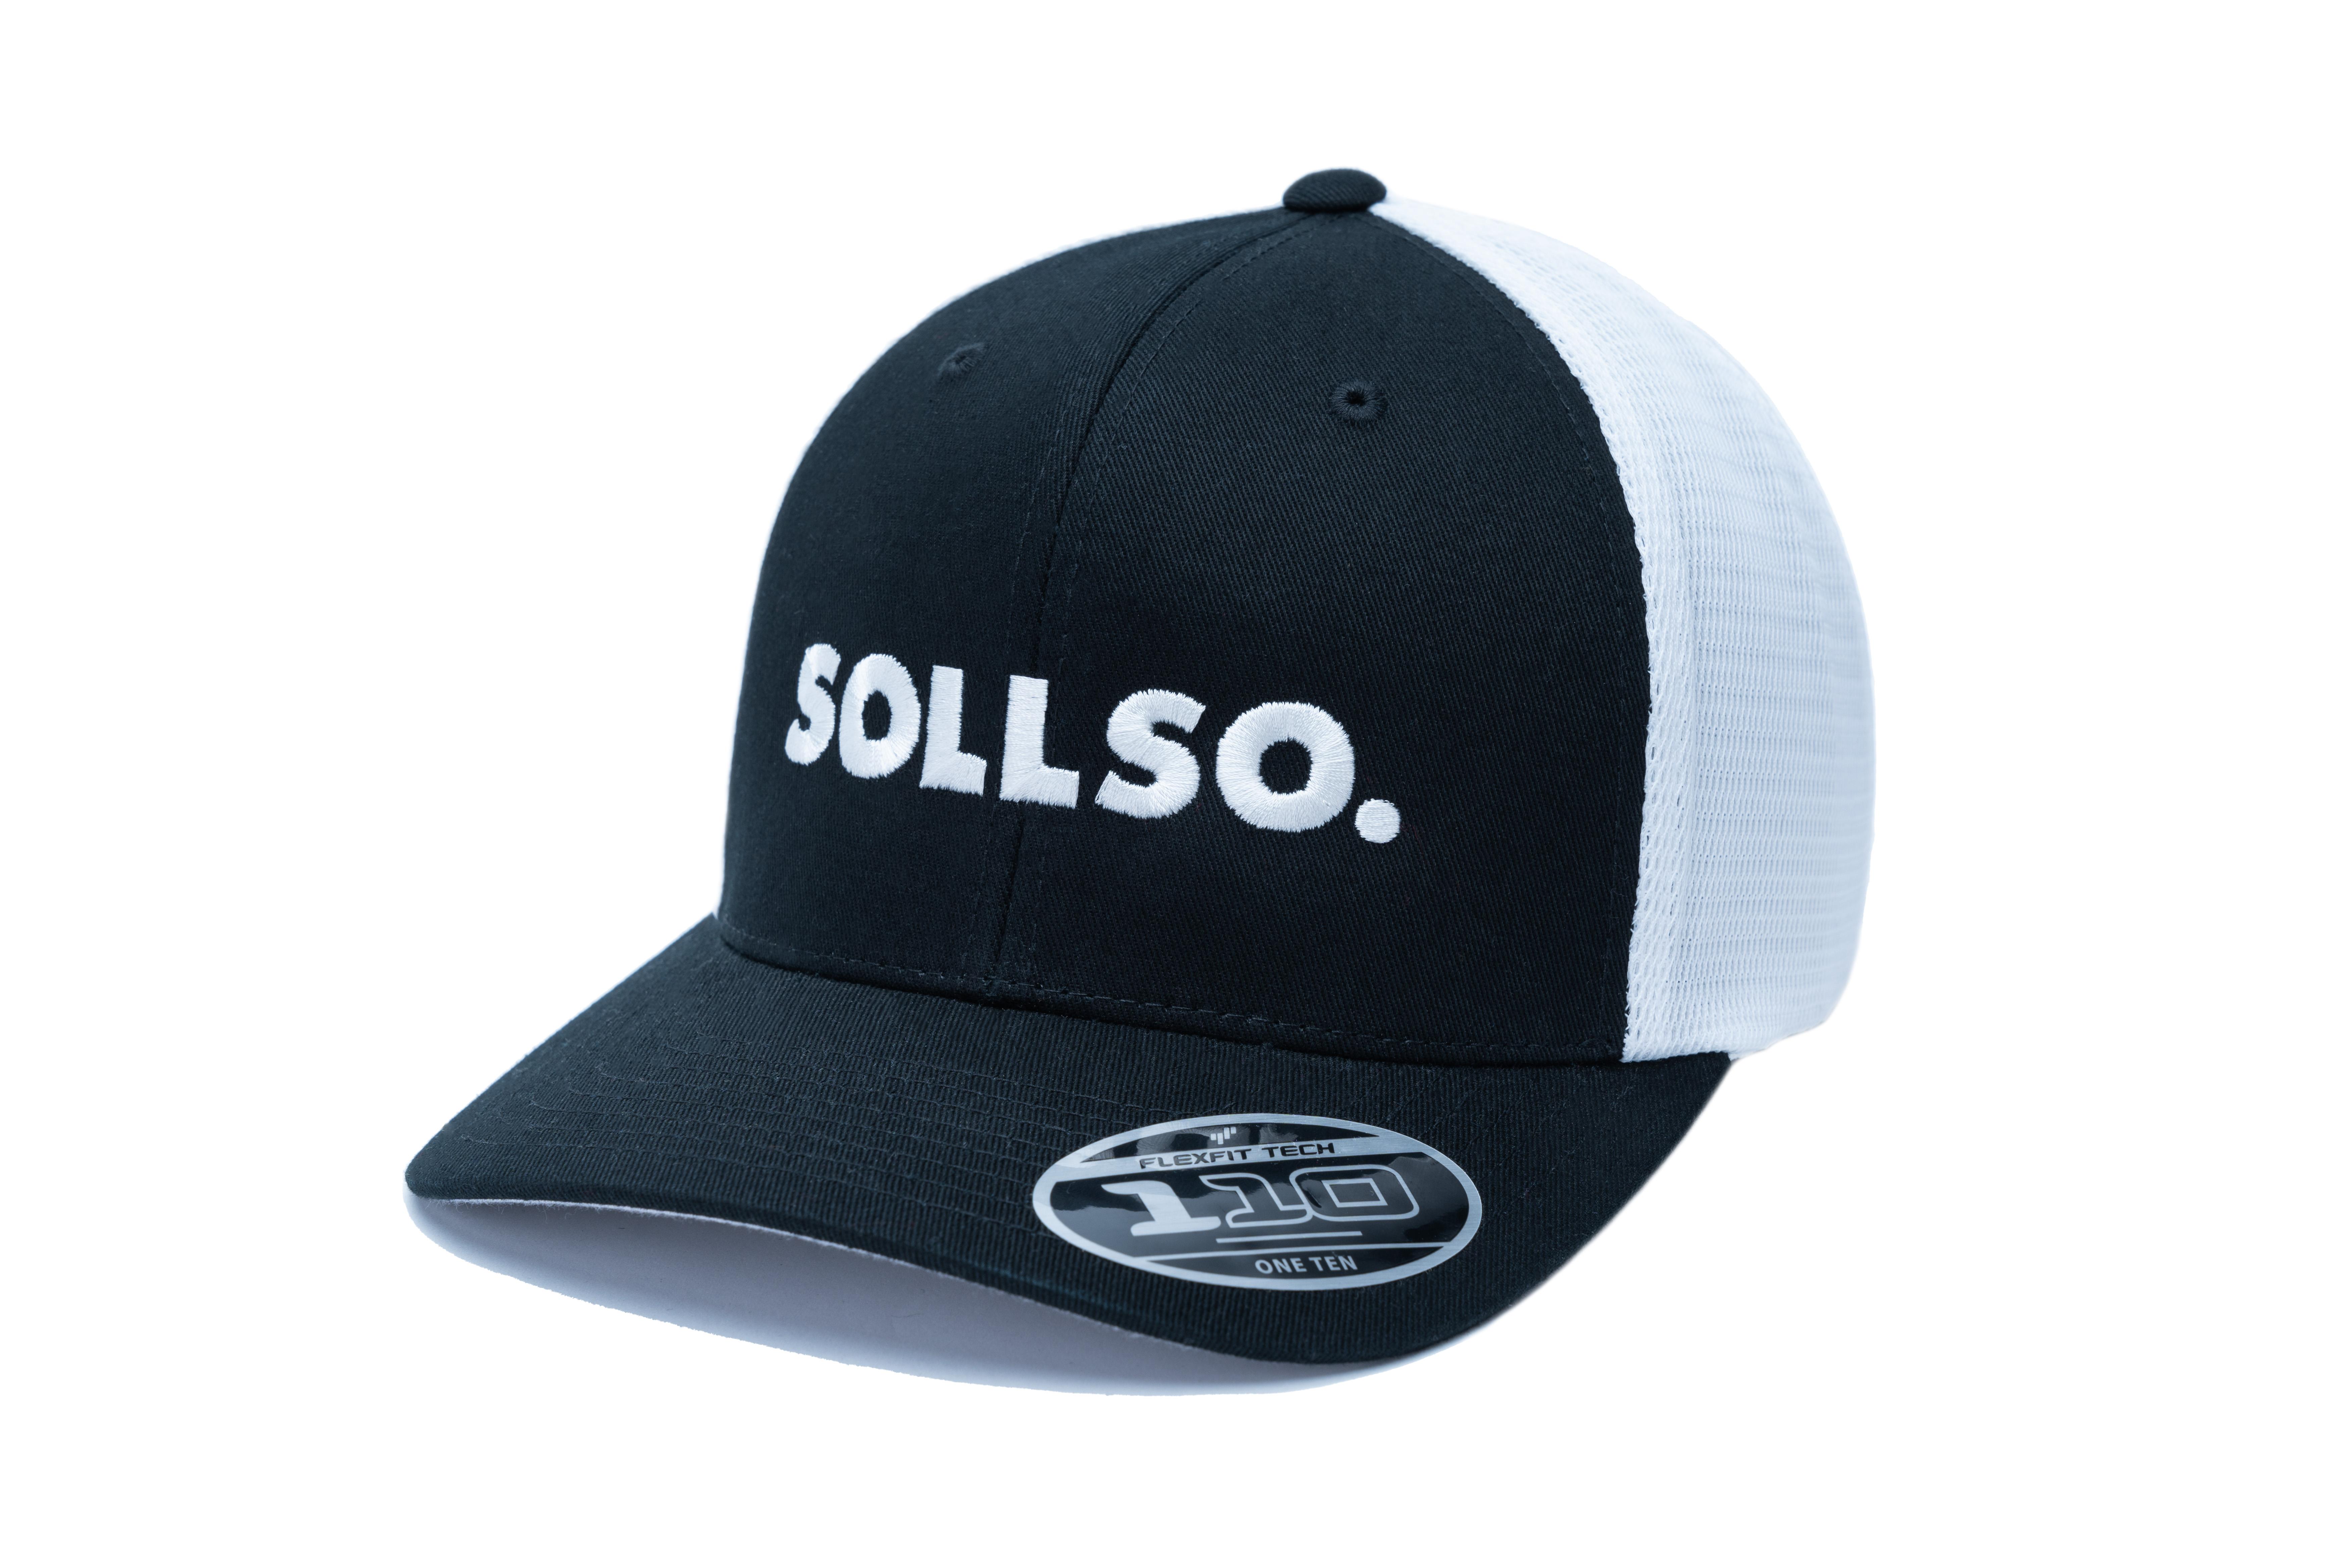 SOLLSO. Mesh 2-Tone Cap, Black-White